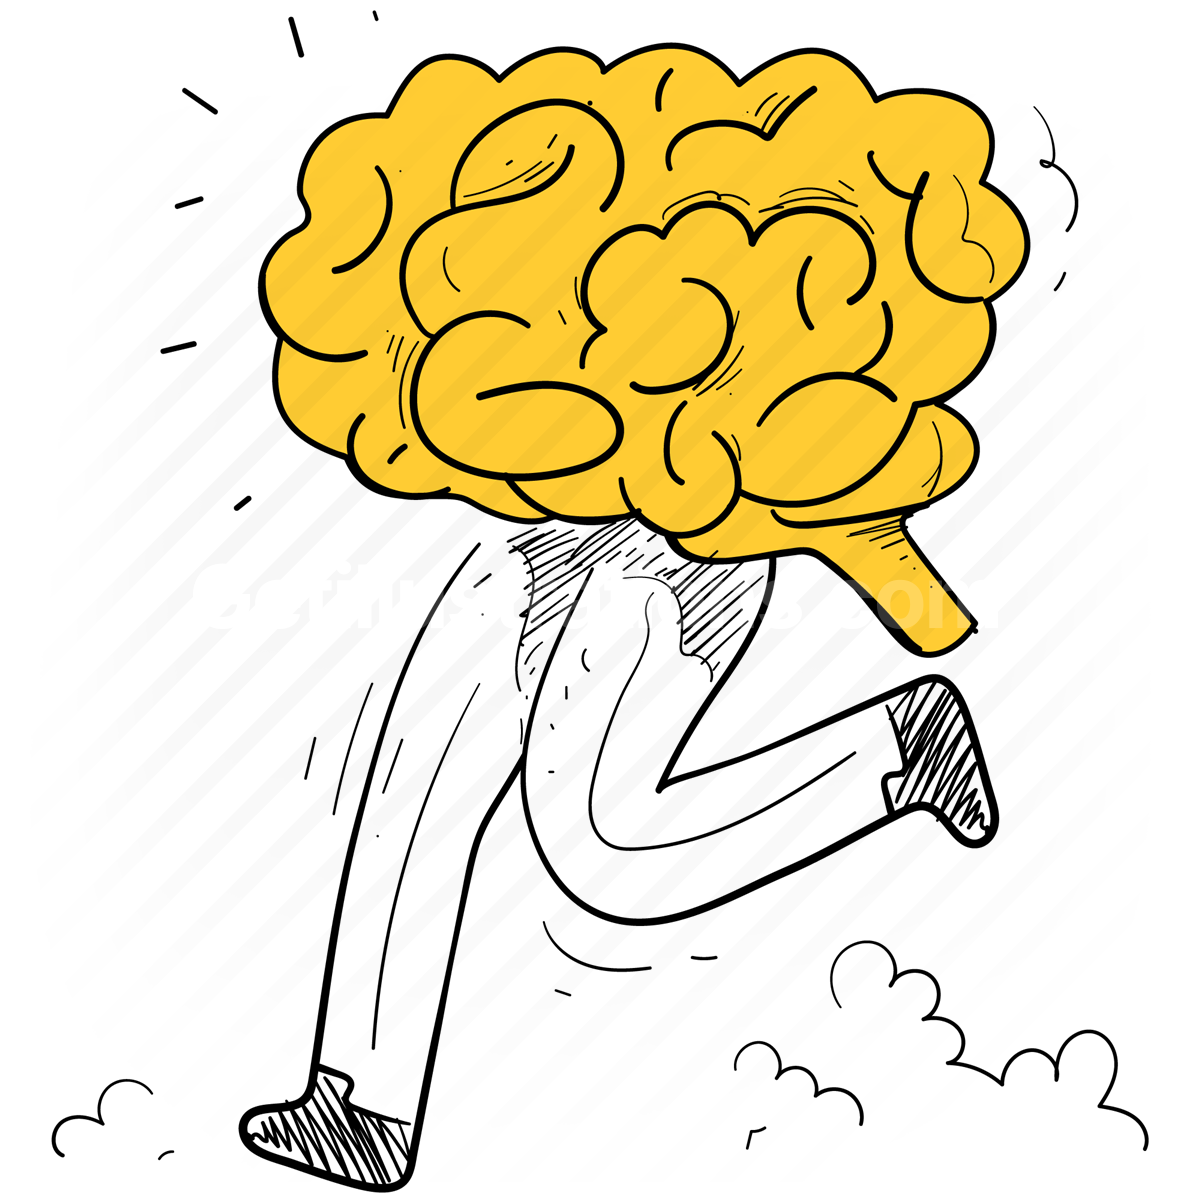 brain, thought, mind, running, overthinking, mental